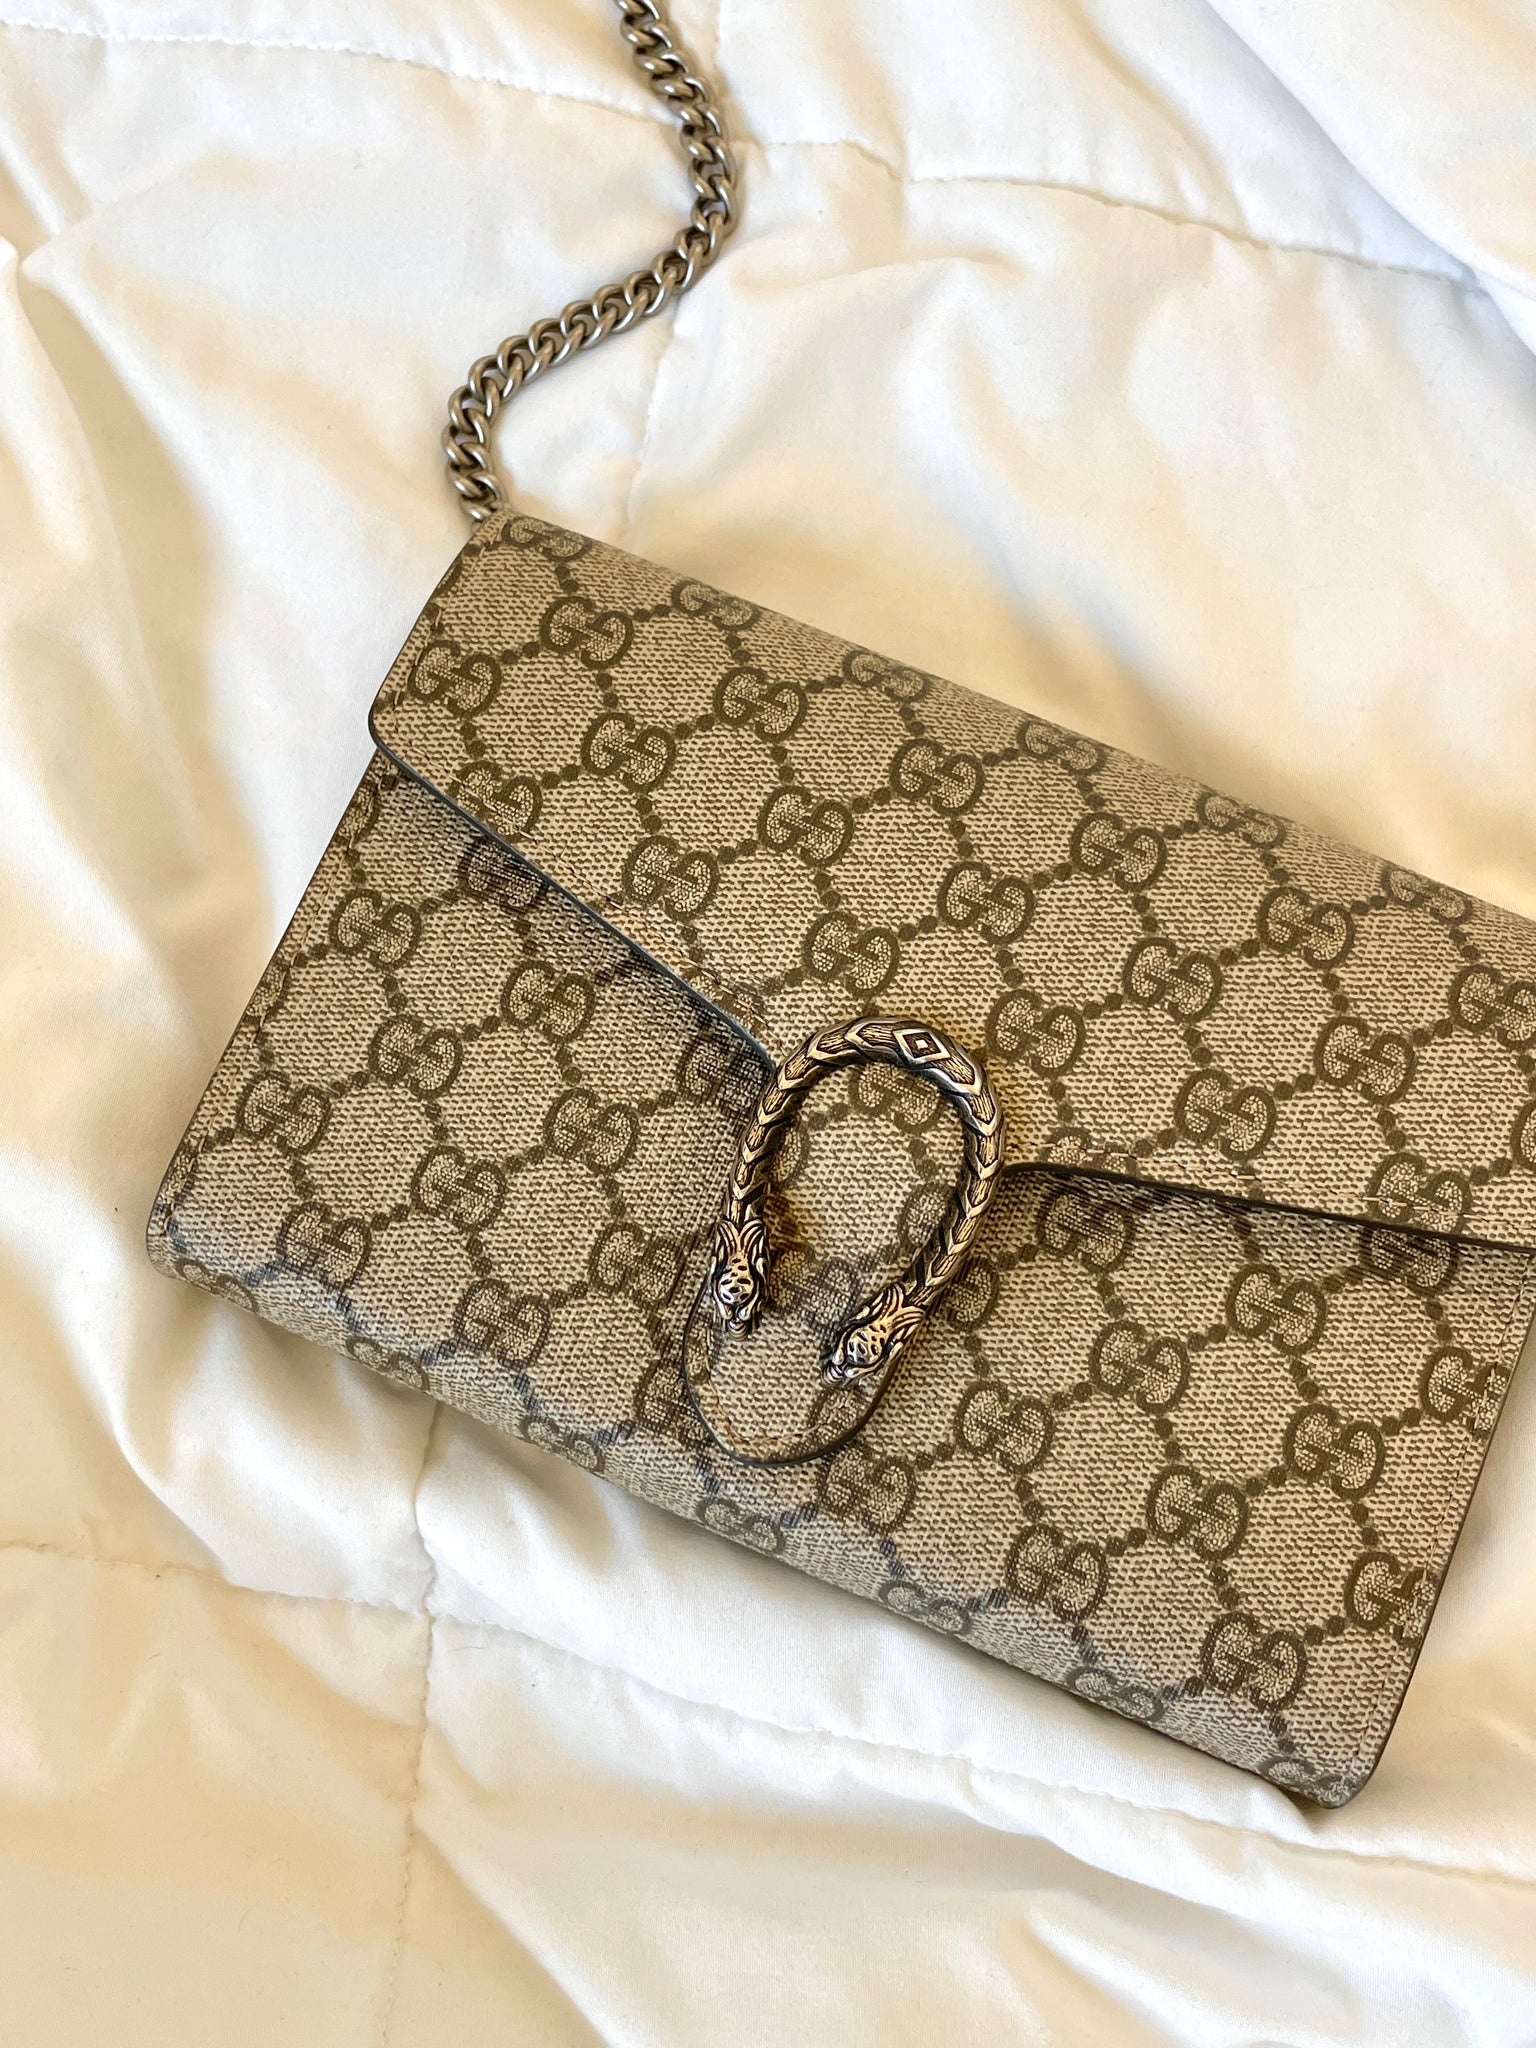 Gucci Dionysus Chain Wallet Handbag